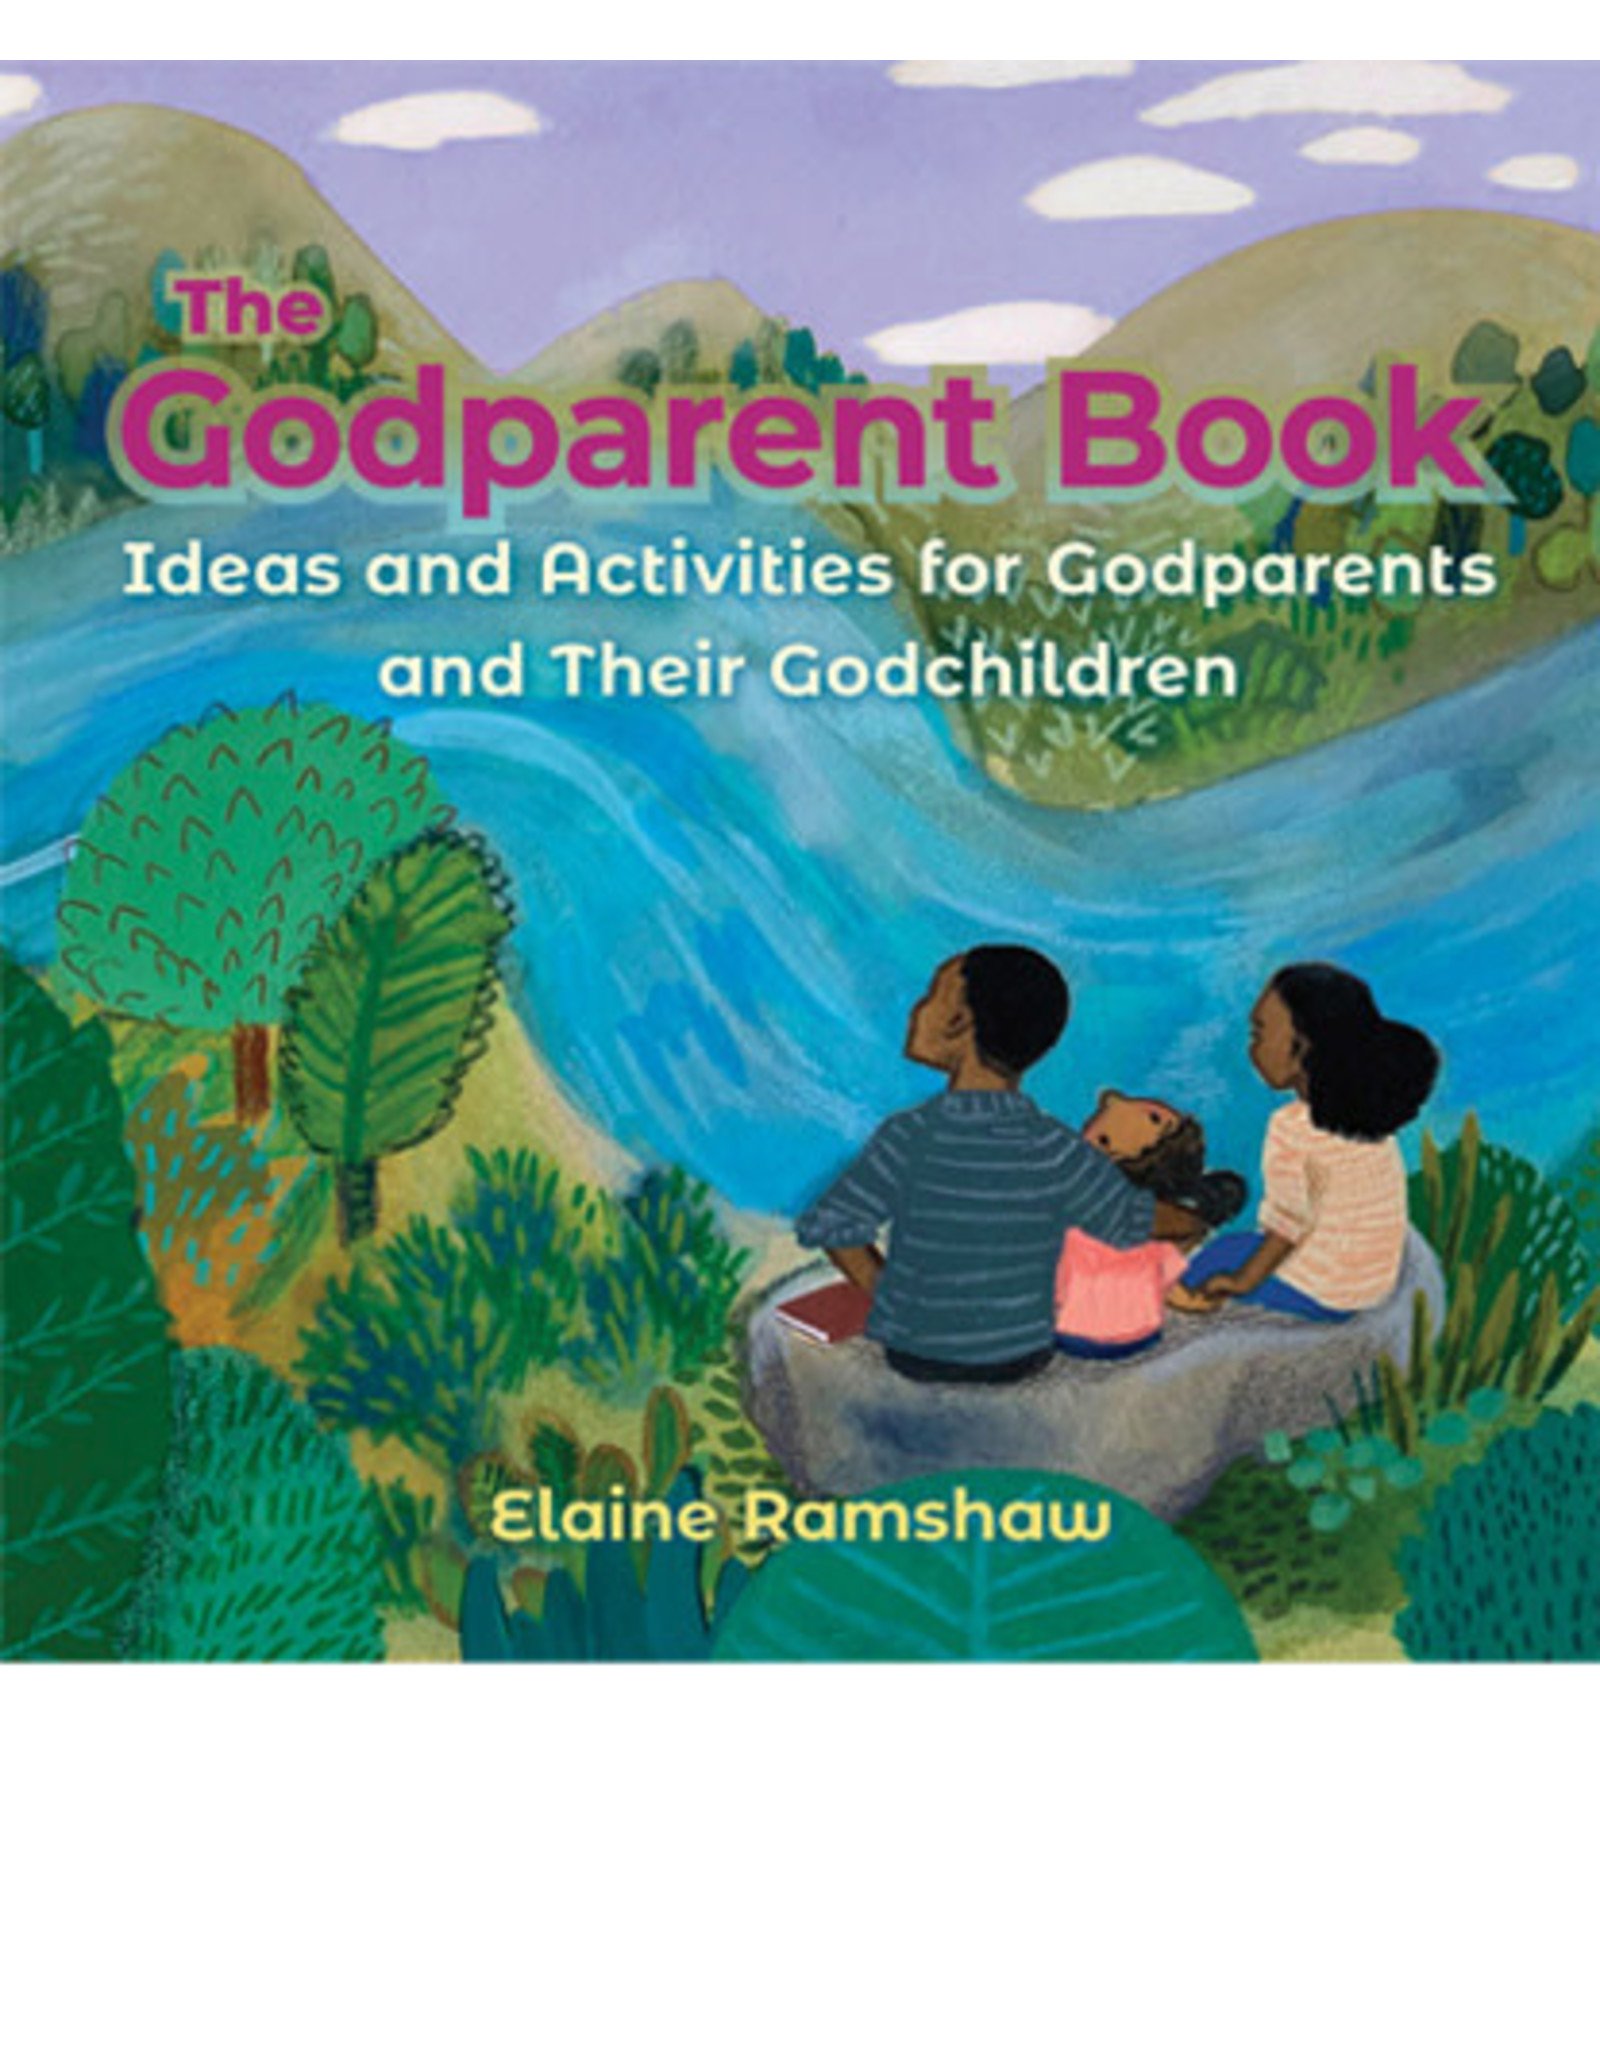 The Godparent Book: Ideas & Activities for Godparents & Their Godchildren